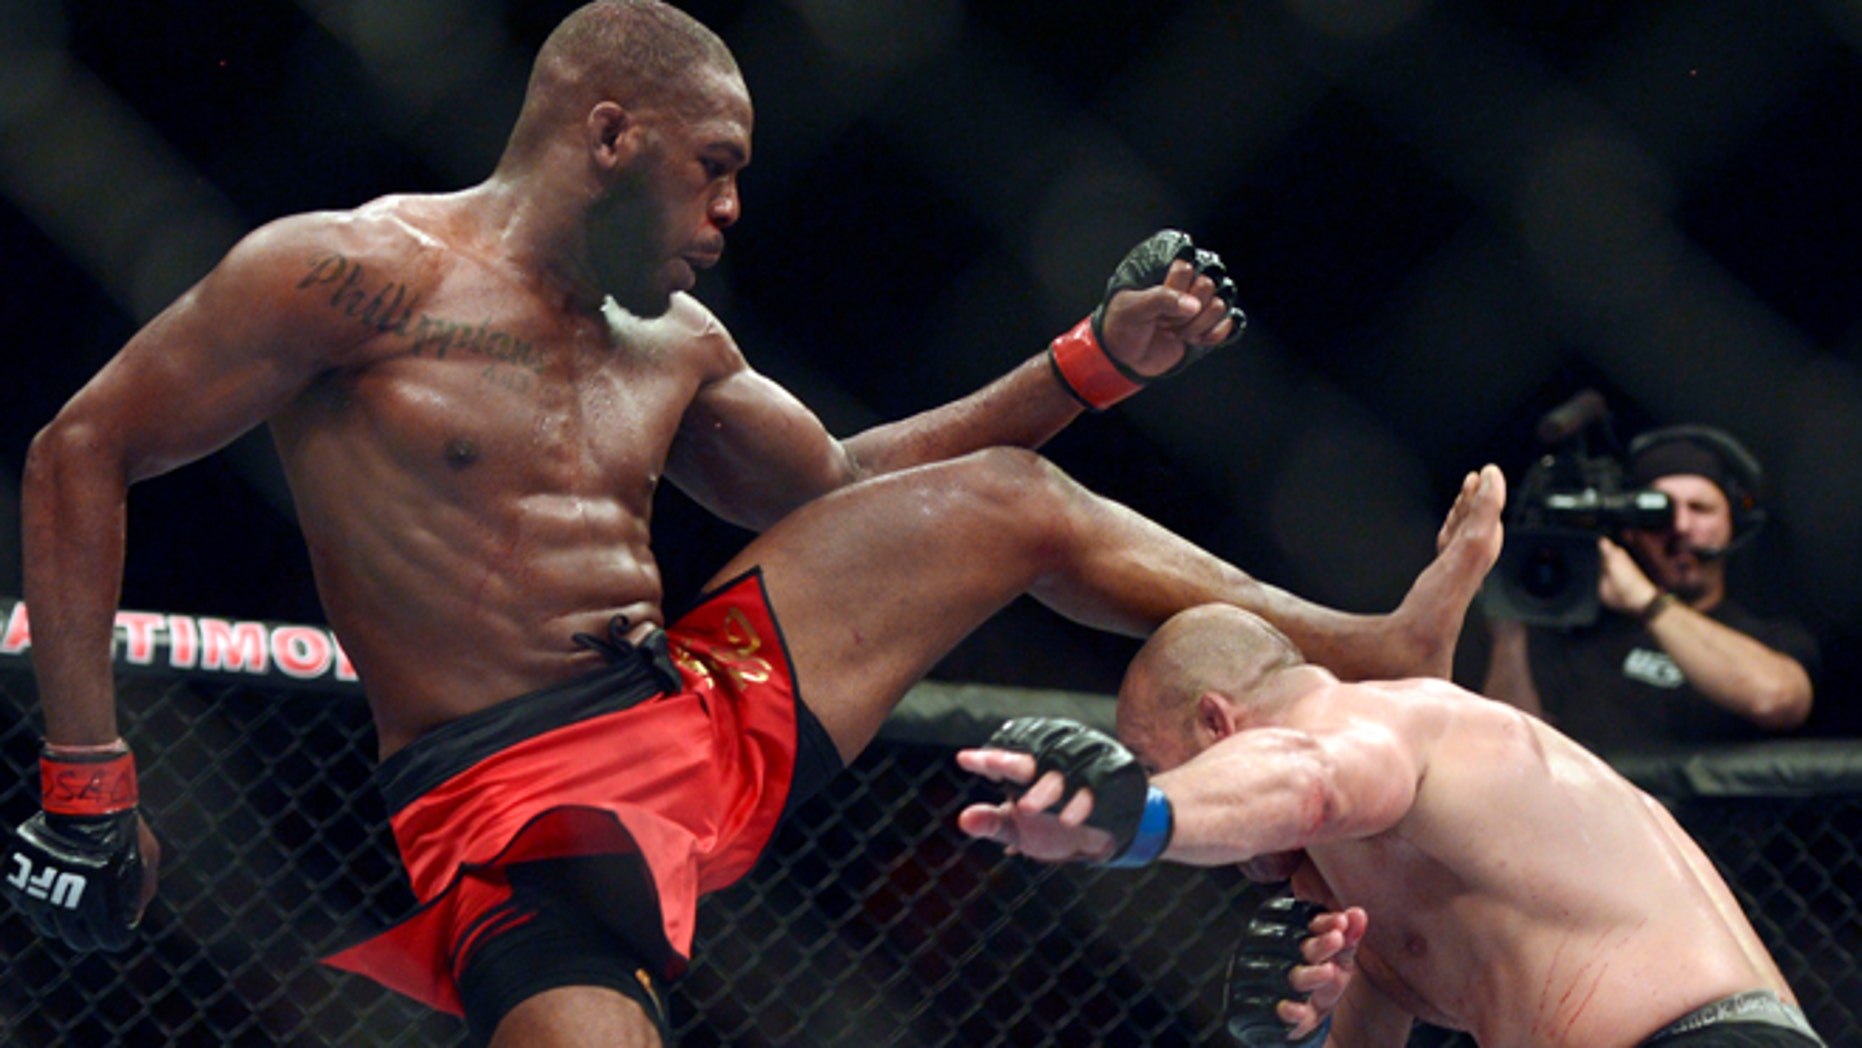 Albuquerque police seek UFC champion Jon Jones in hit-and-run | Fox News